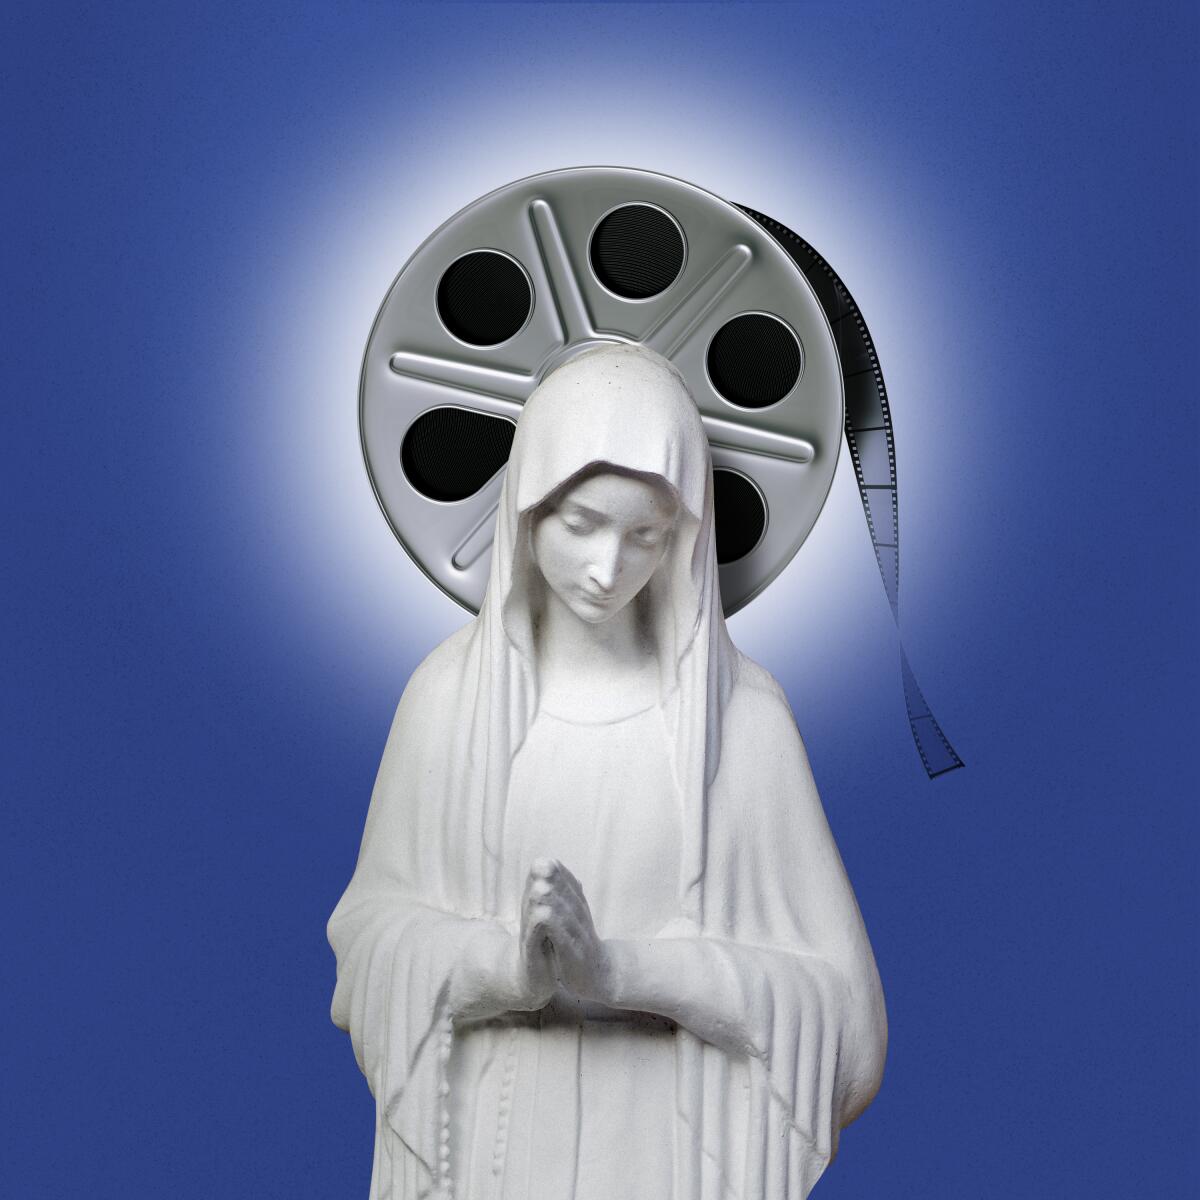 Film finds religion